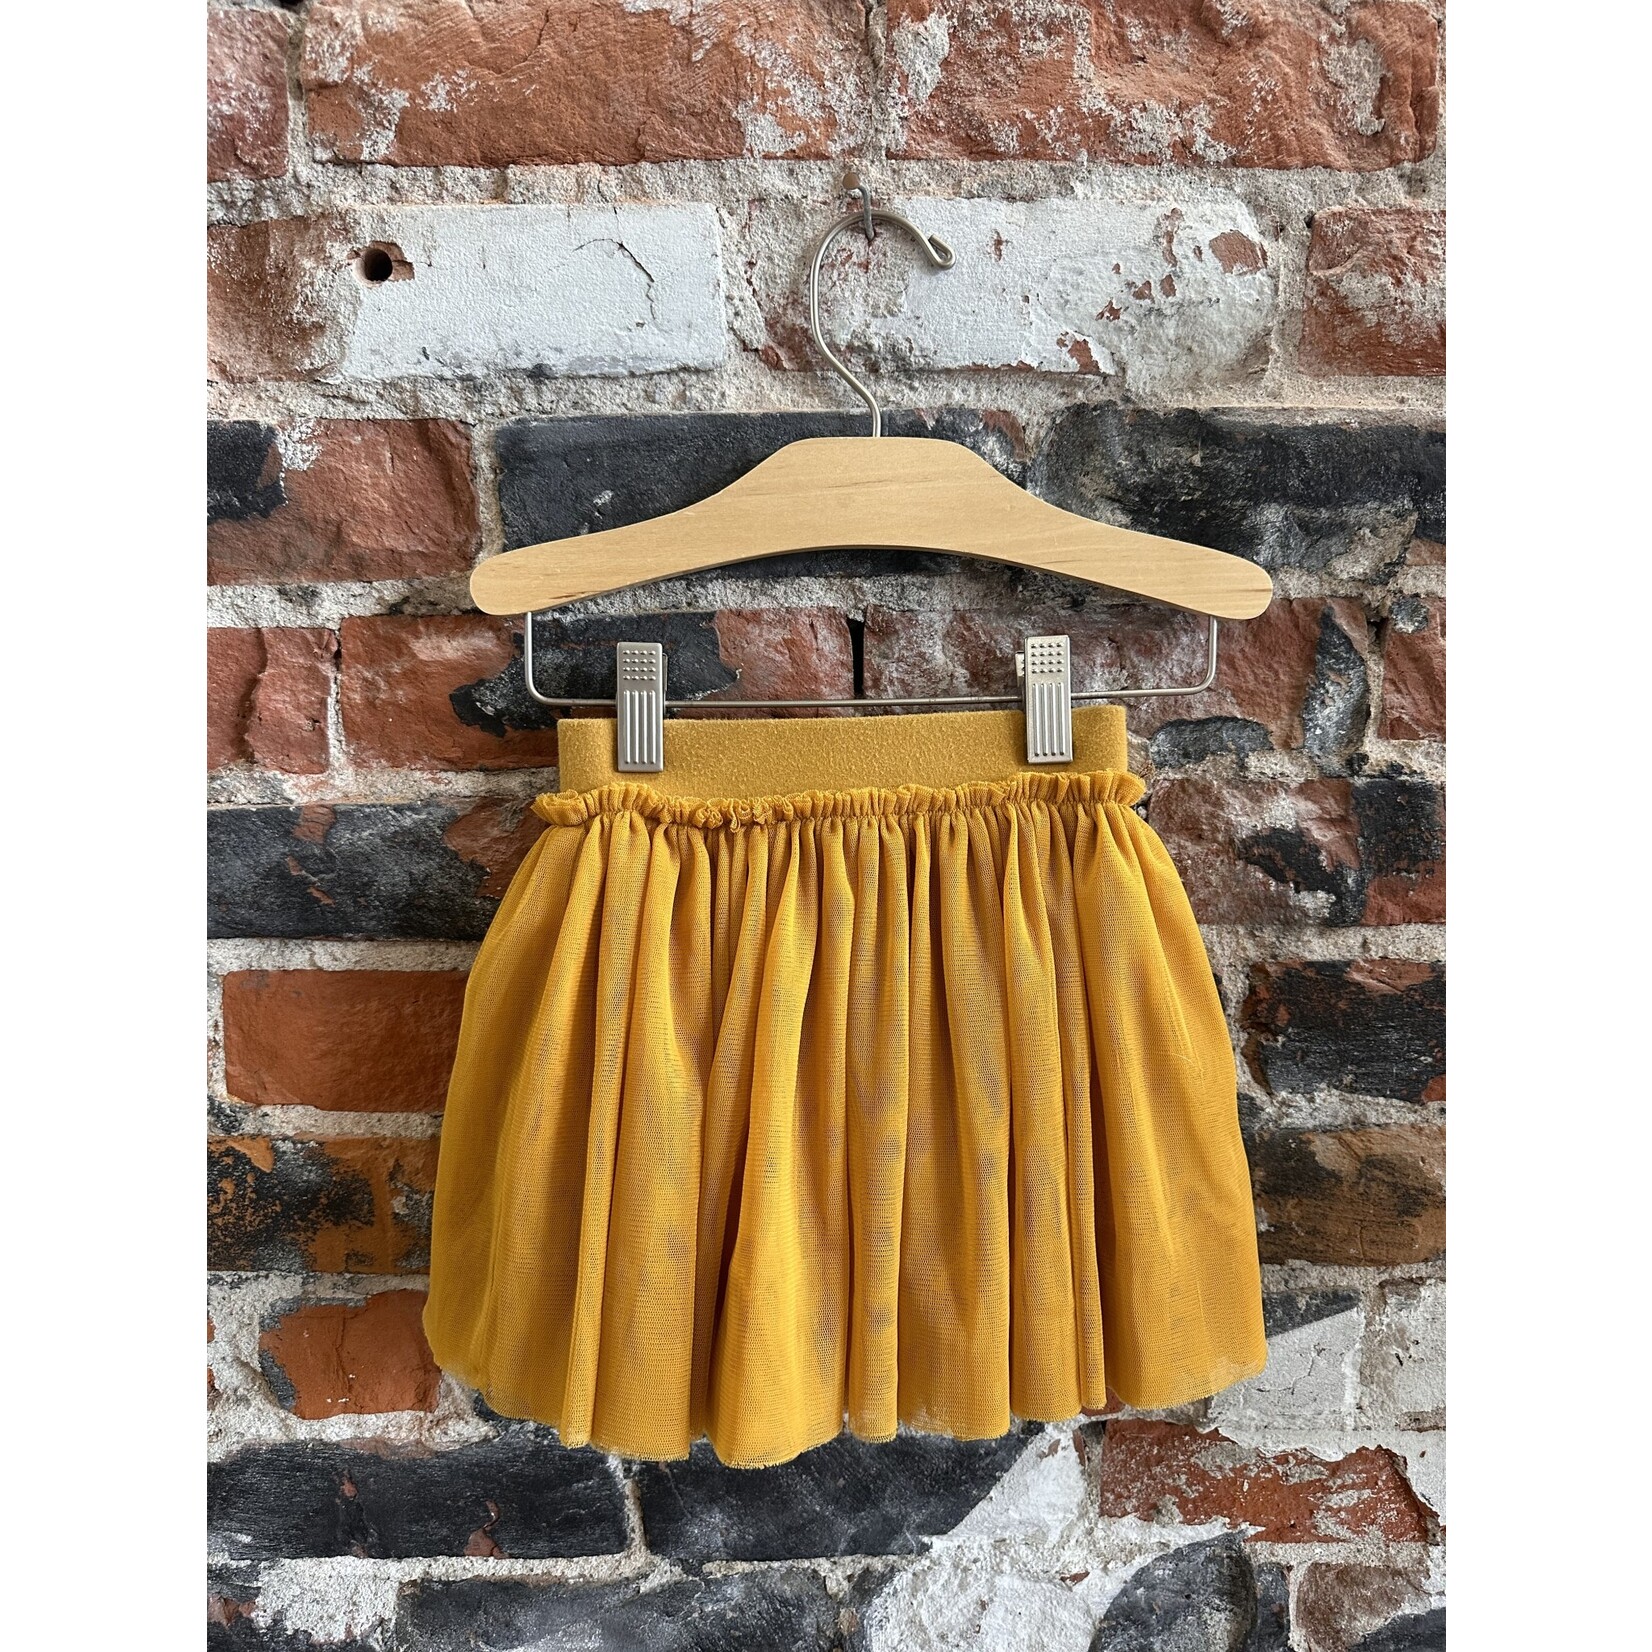 taylor joelle taylor joelle mustard skirt - 2T